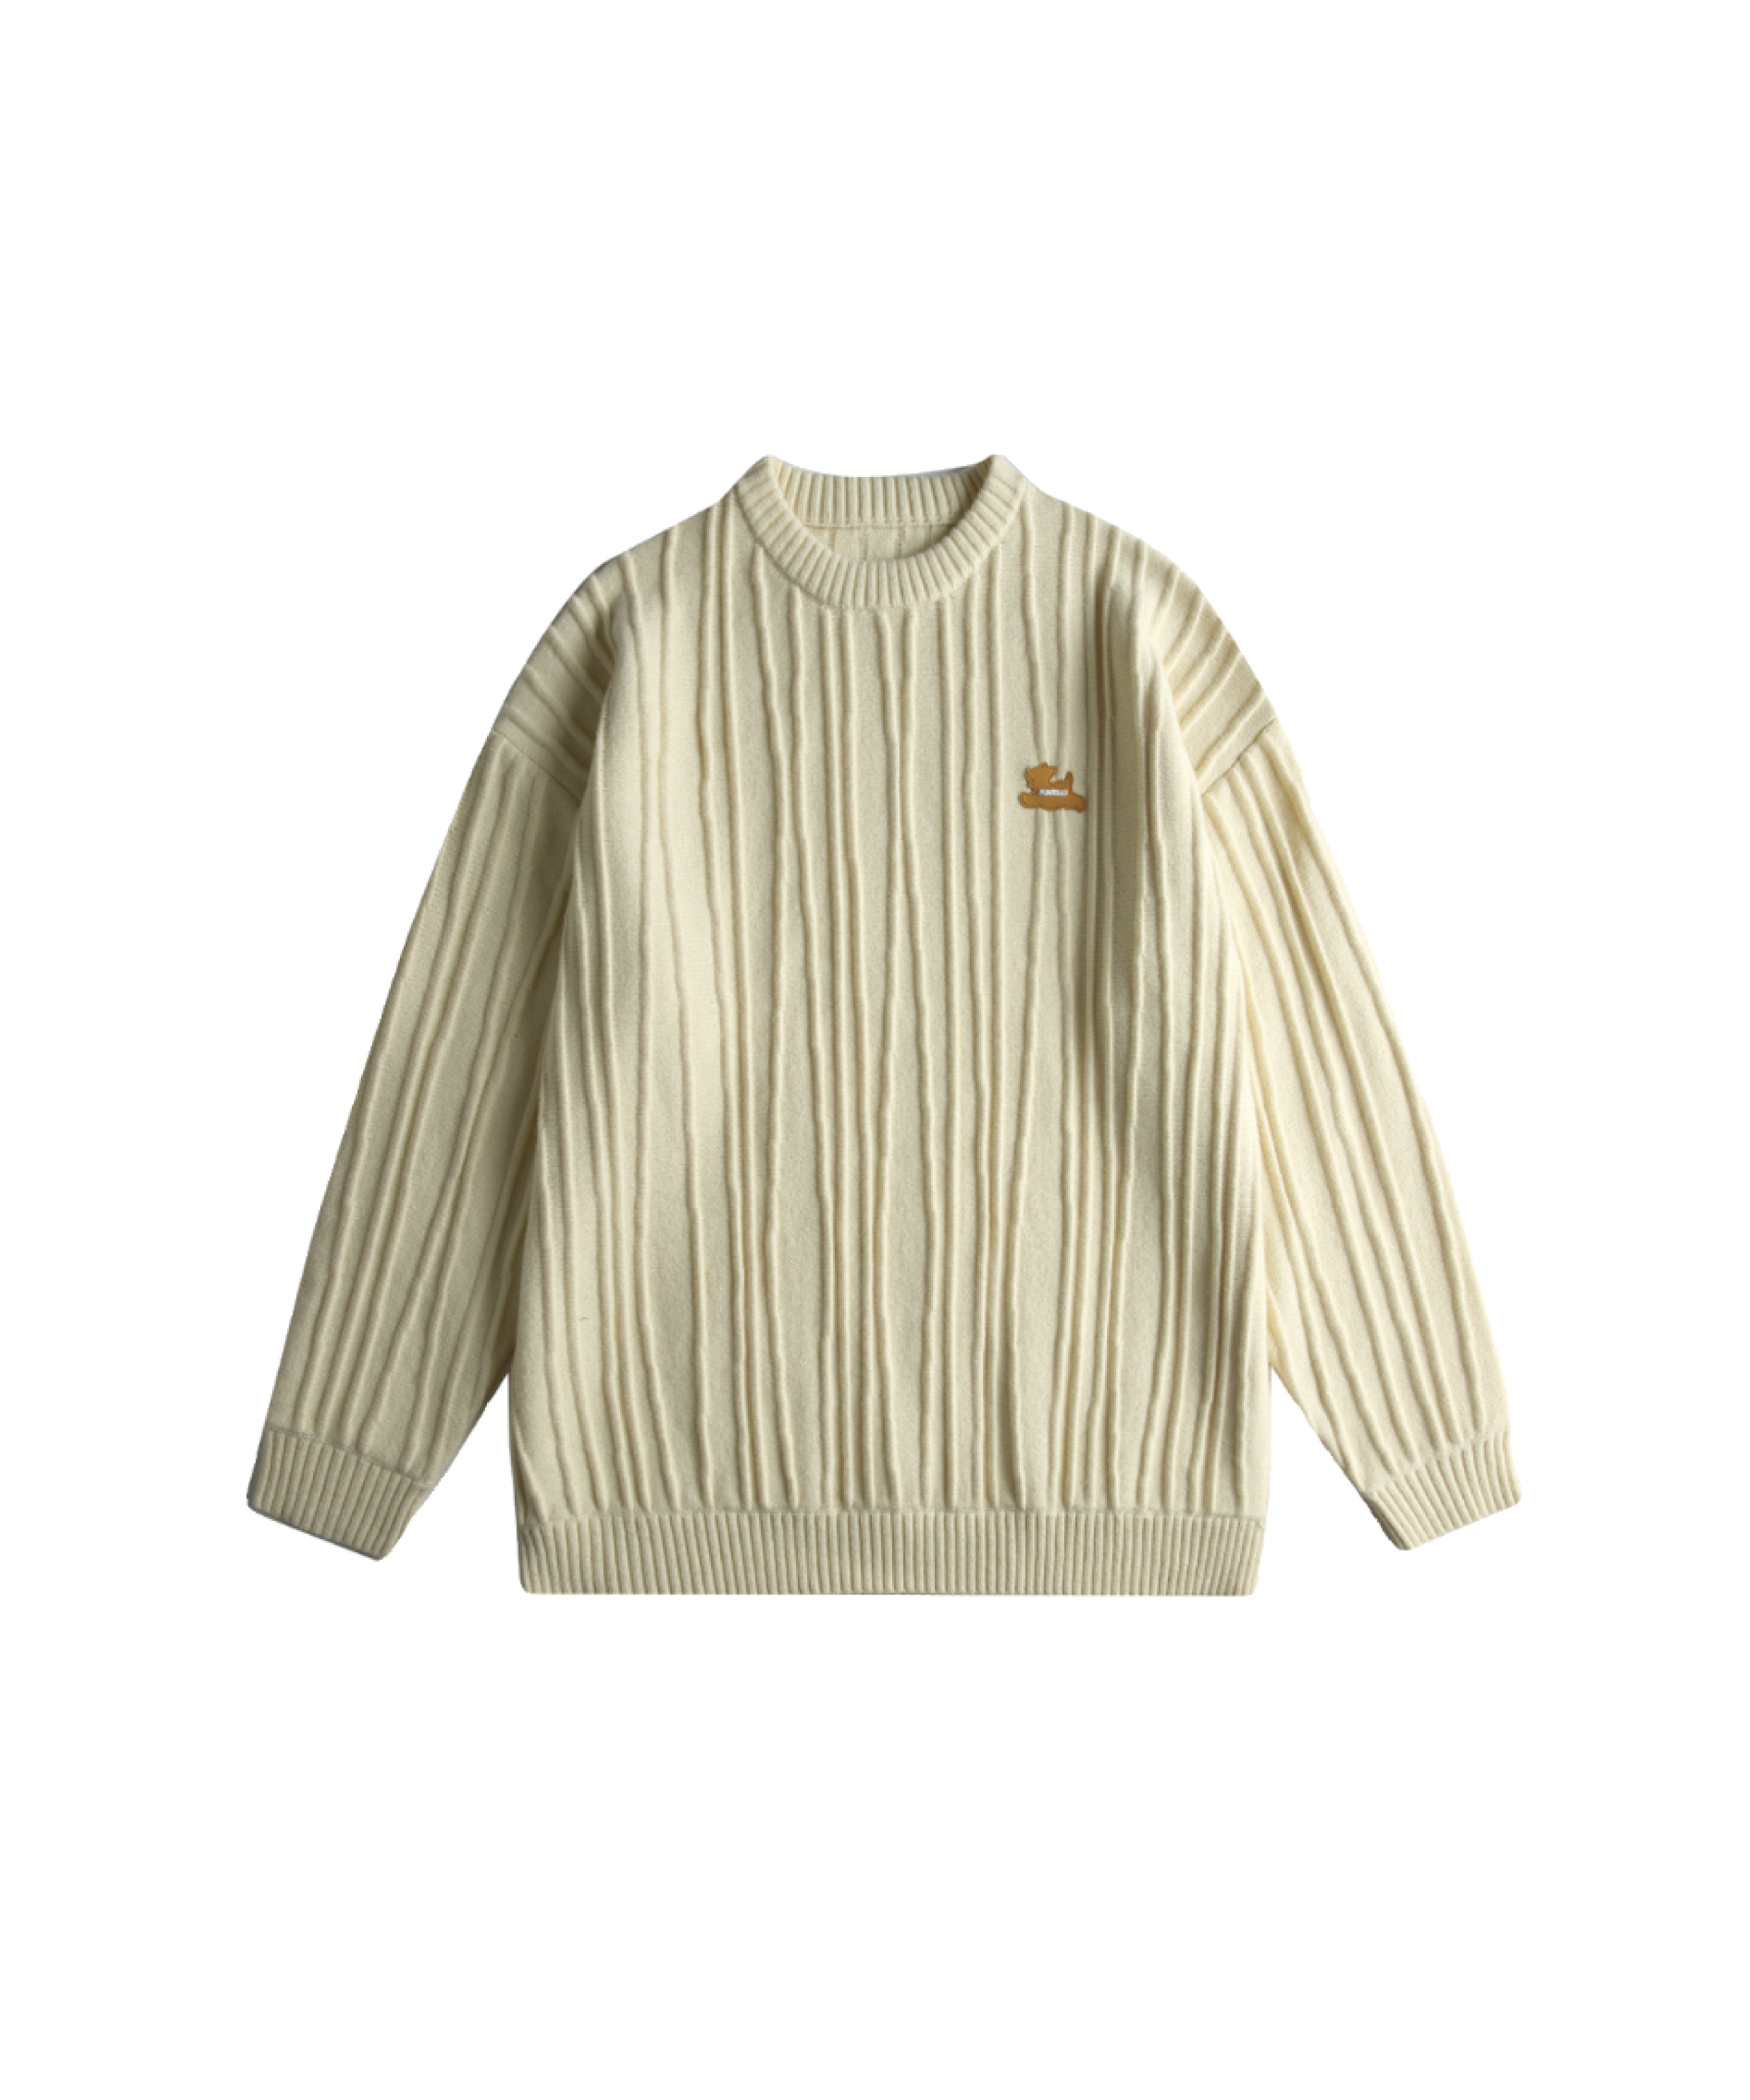 Vertical Fine Lines Jeresy Sweater